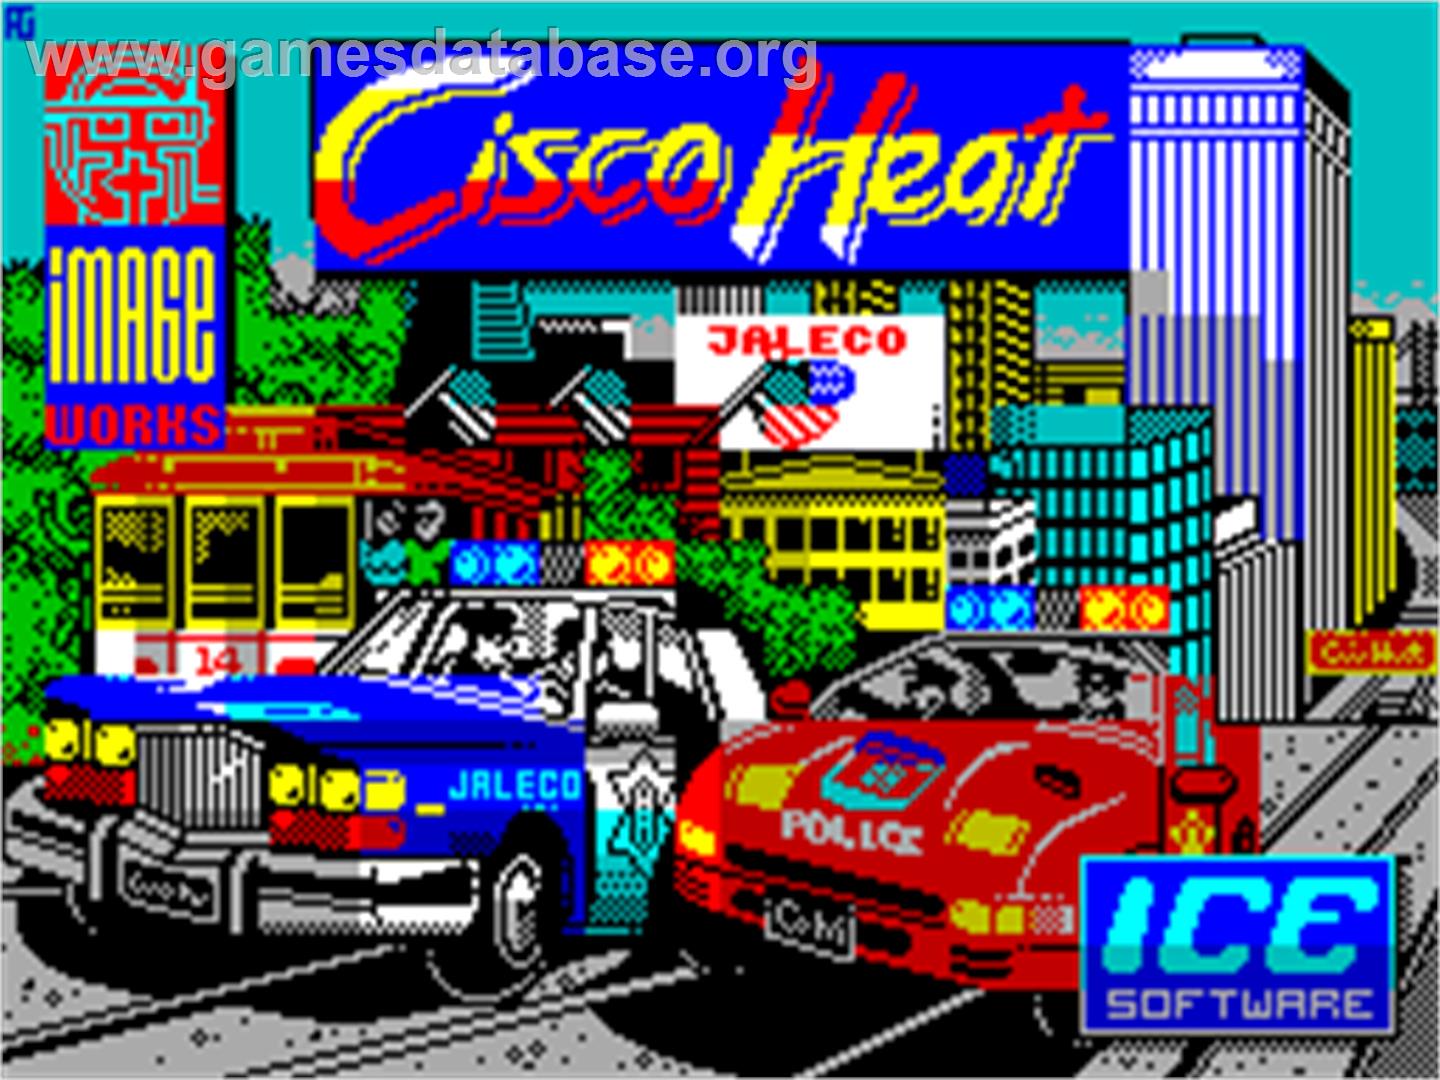 Cisco Heat: All American Police Car Race - Sinclair ZX Spectrum - Artwork - Title Screen